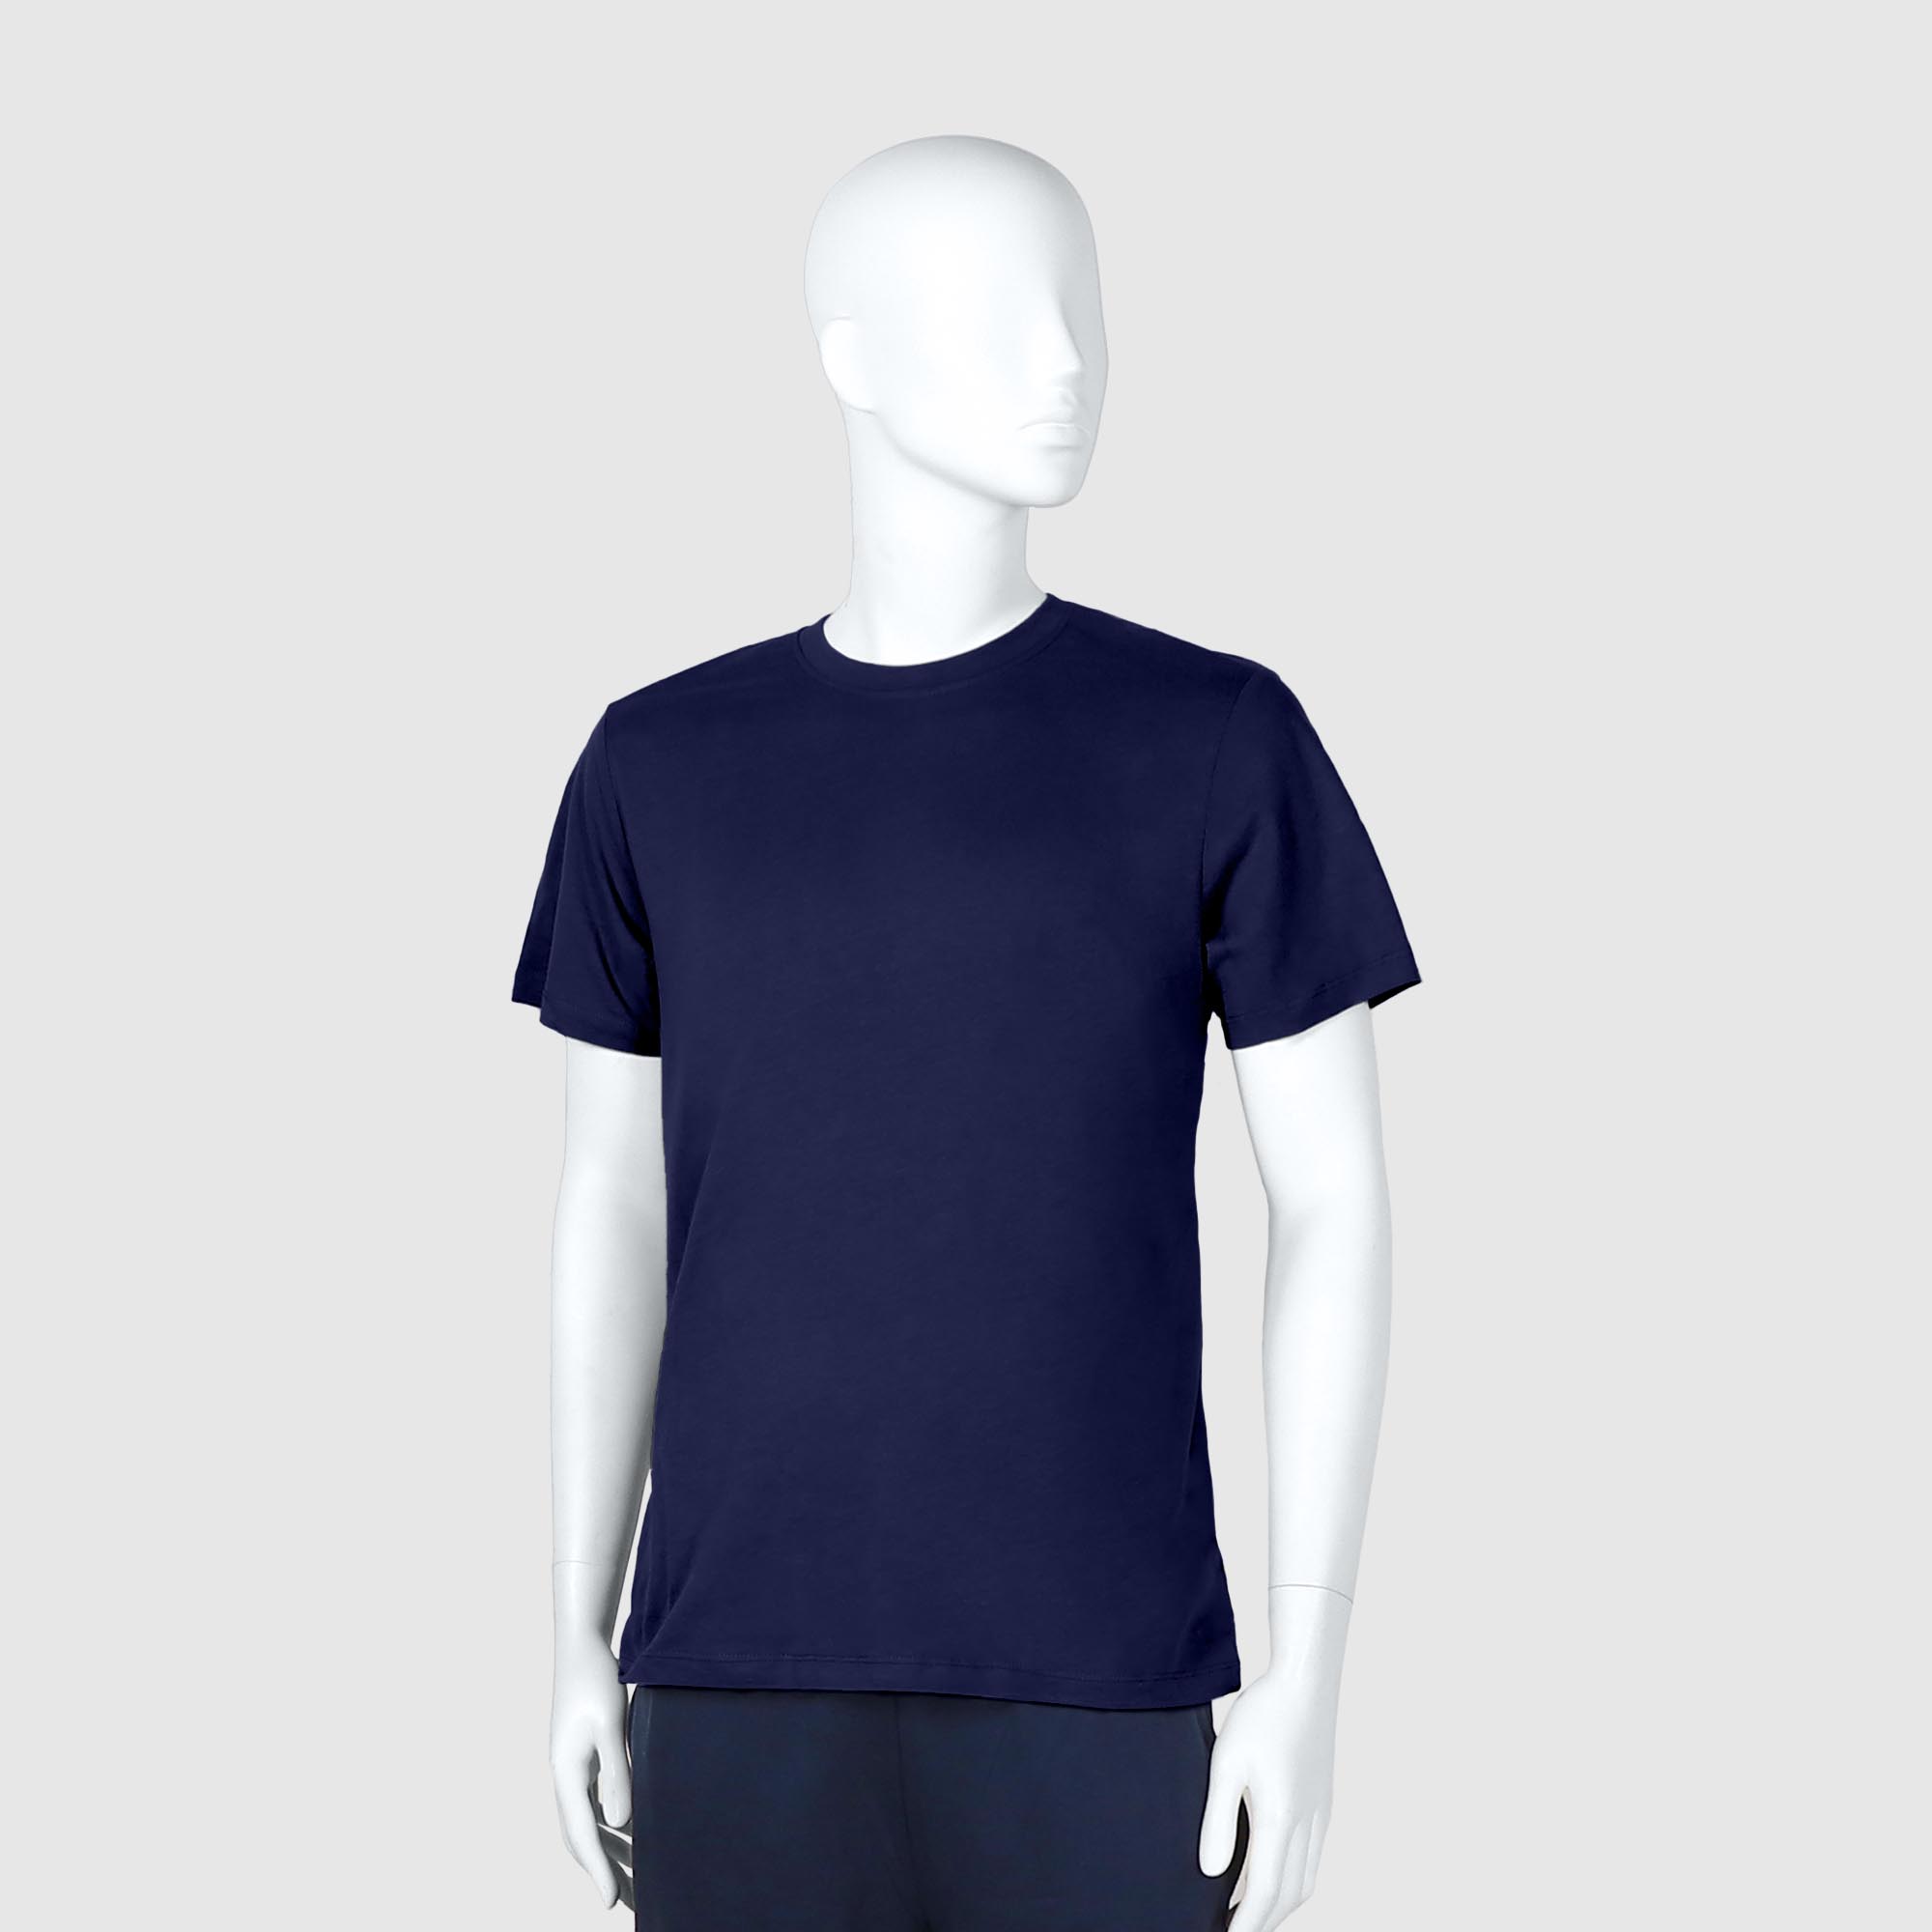 Мужская футболка Diva Teks синяя (DTD-05), цвет синий, размер 40-52